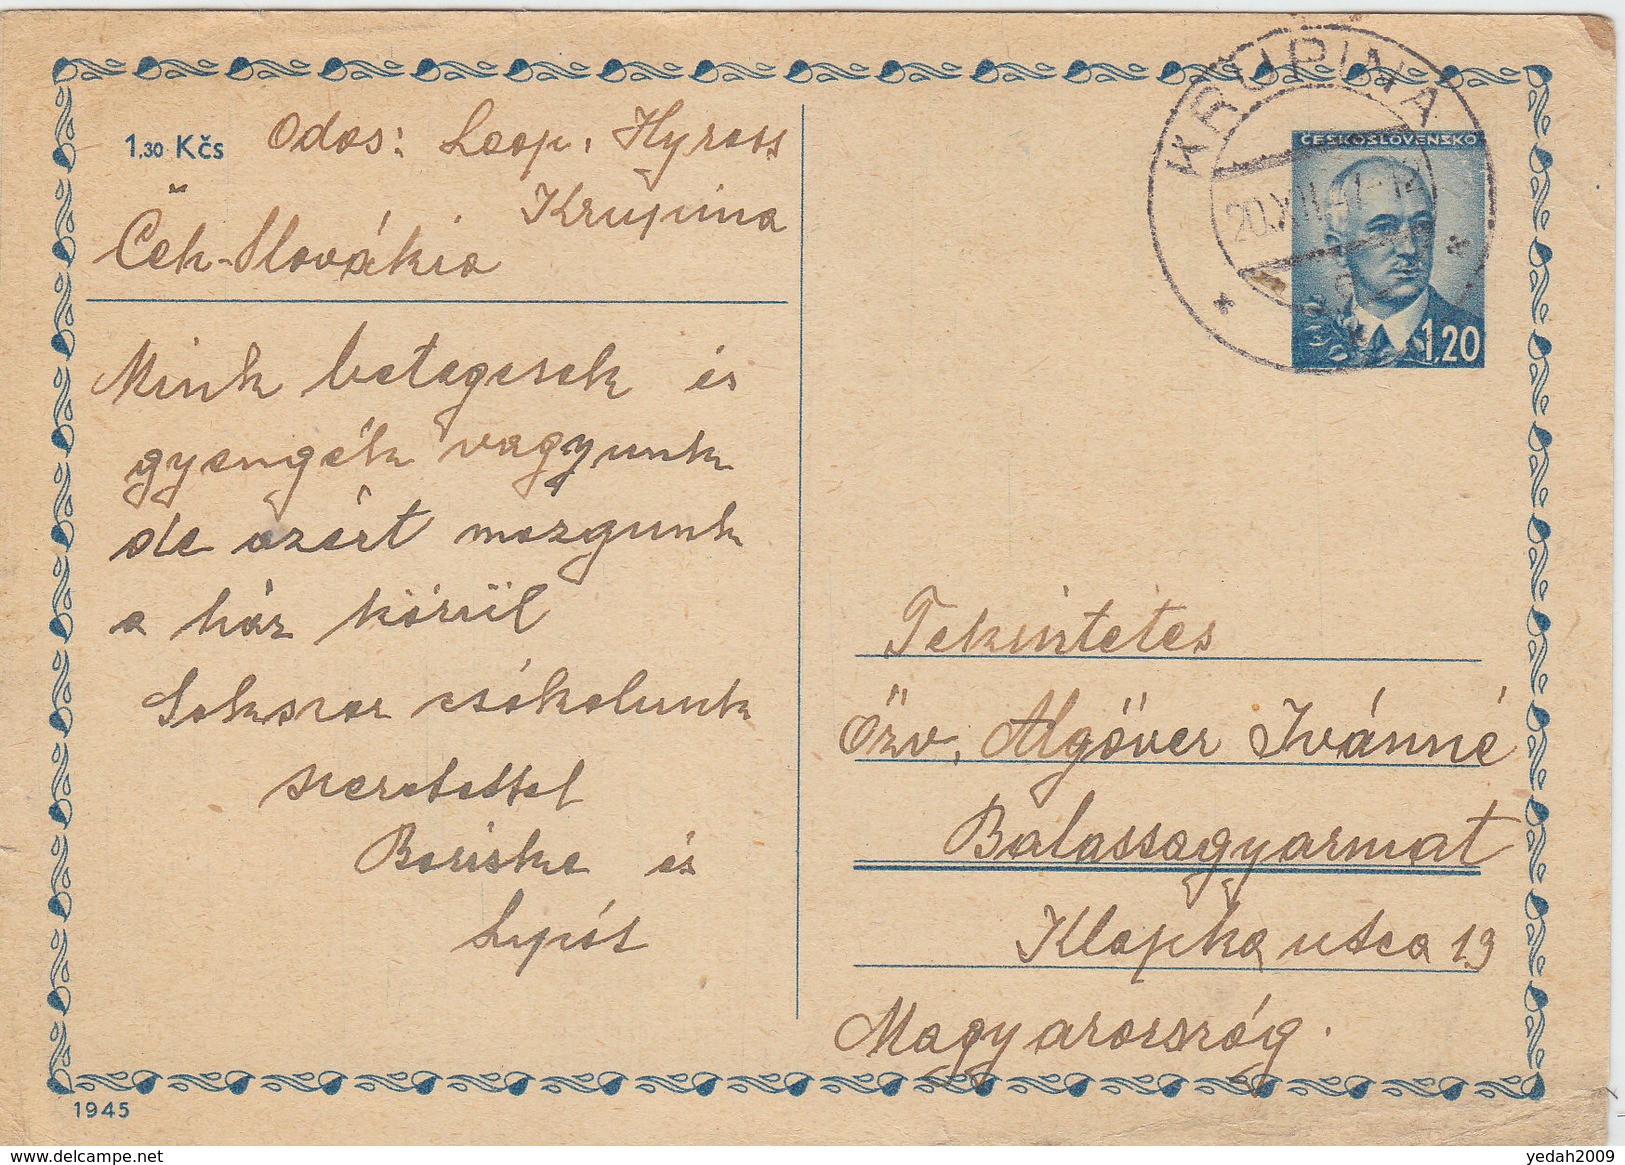 CZEHOSLOVAKIA POSTAL CARDS 1947 - Briefe